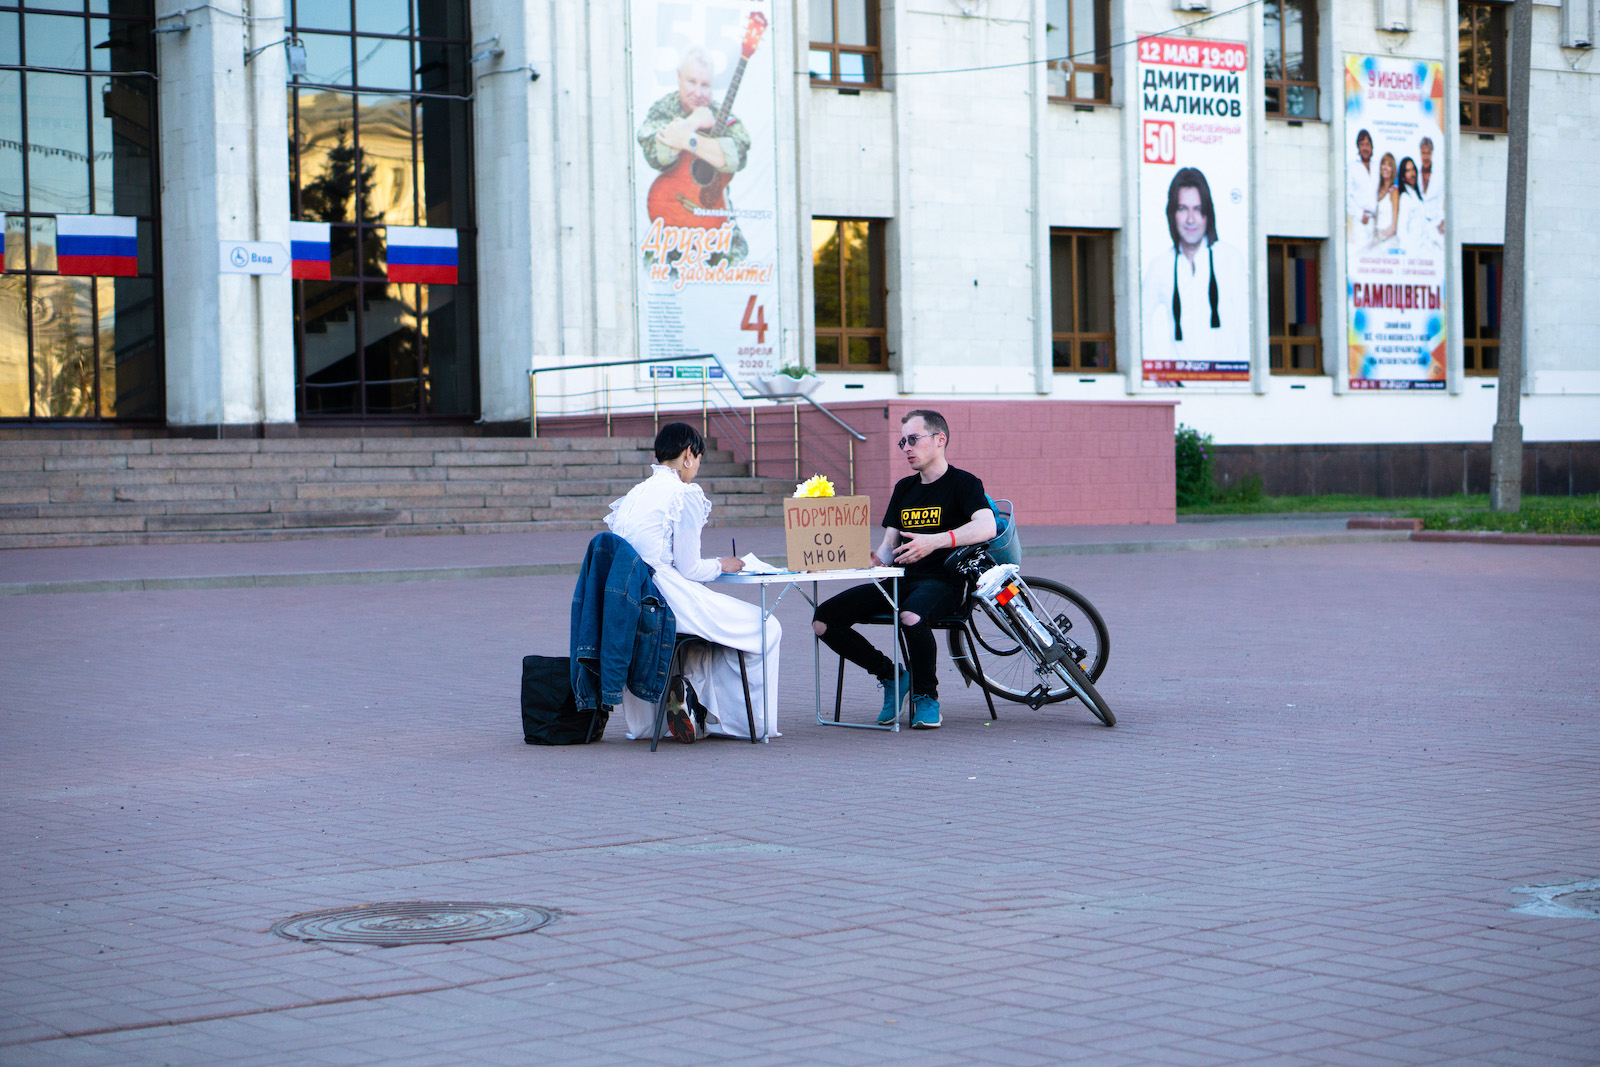 A performance of "Argue with Me". Image: Yevgeniy Zvezdoruk